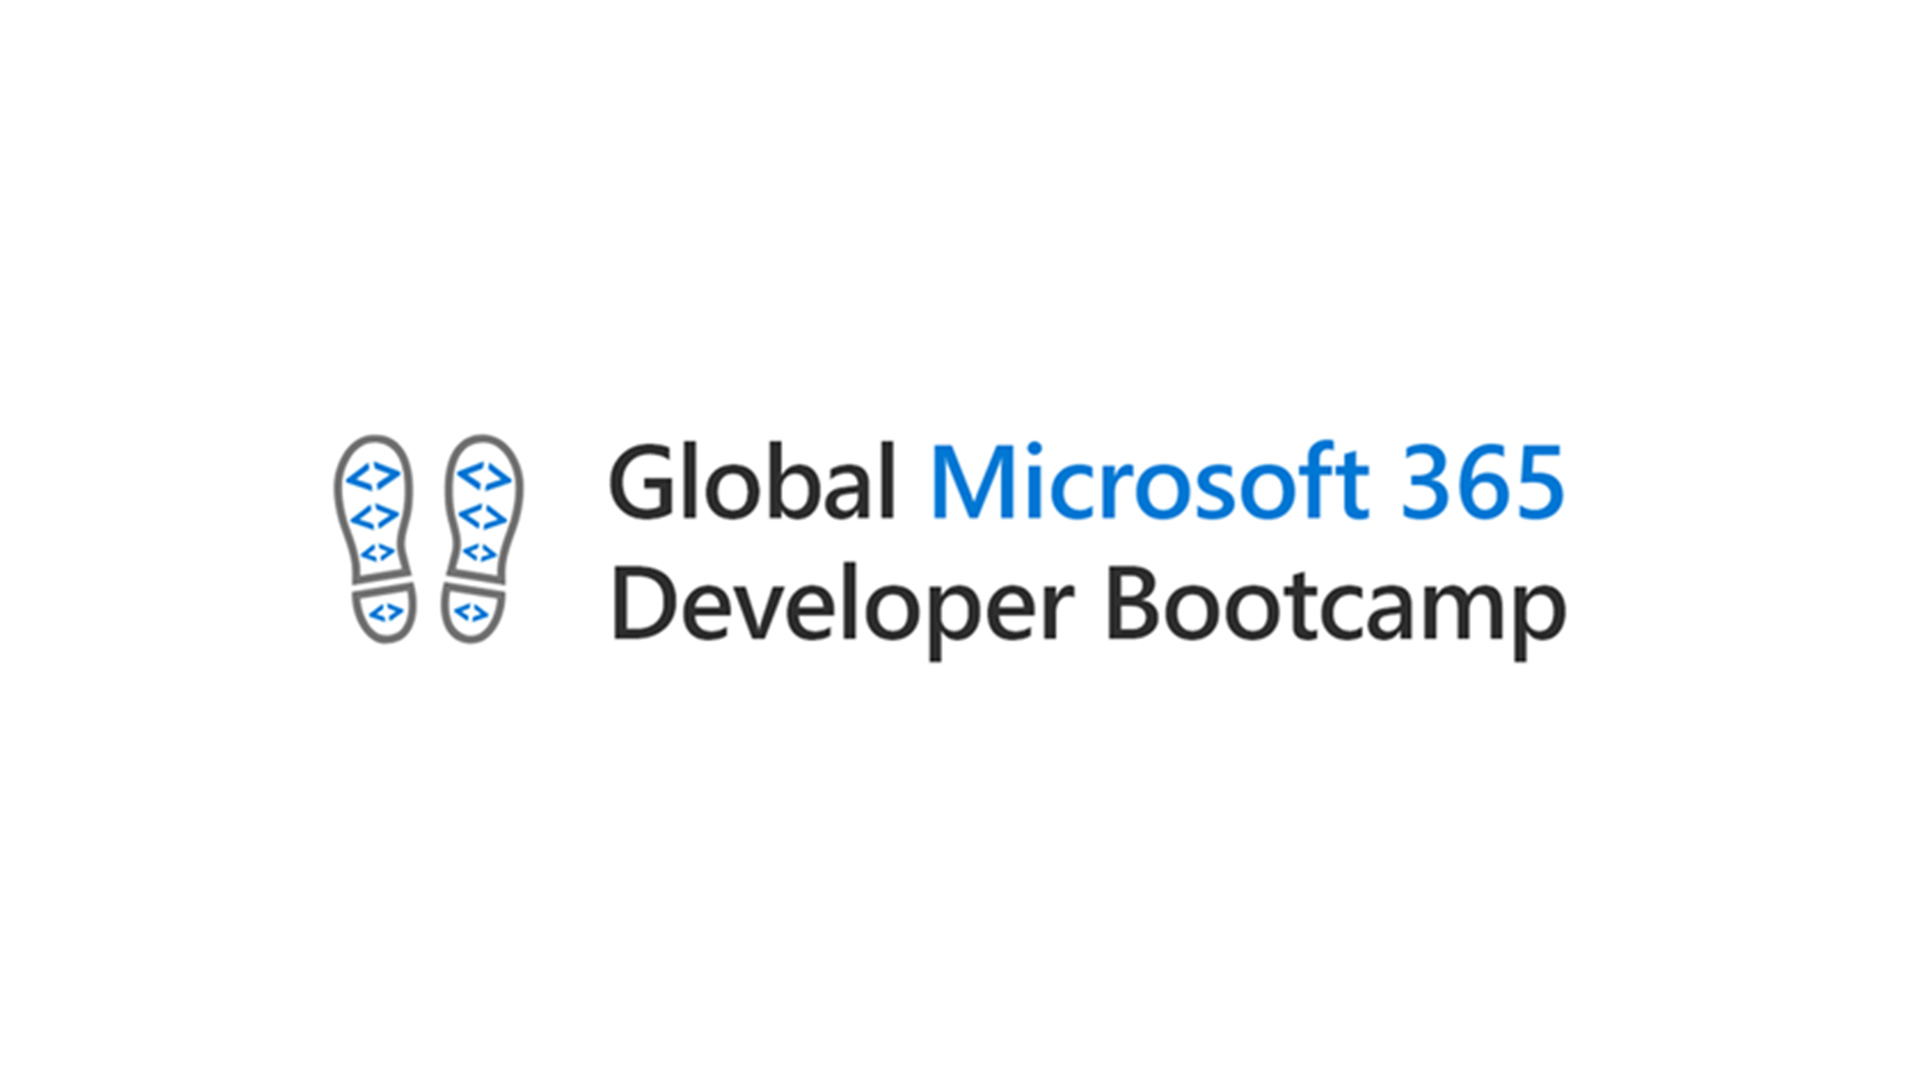 Develop Boot camp